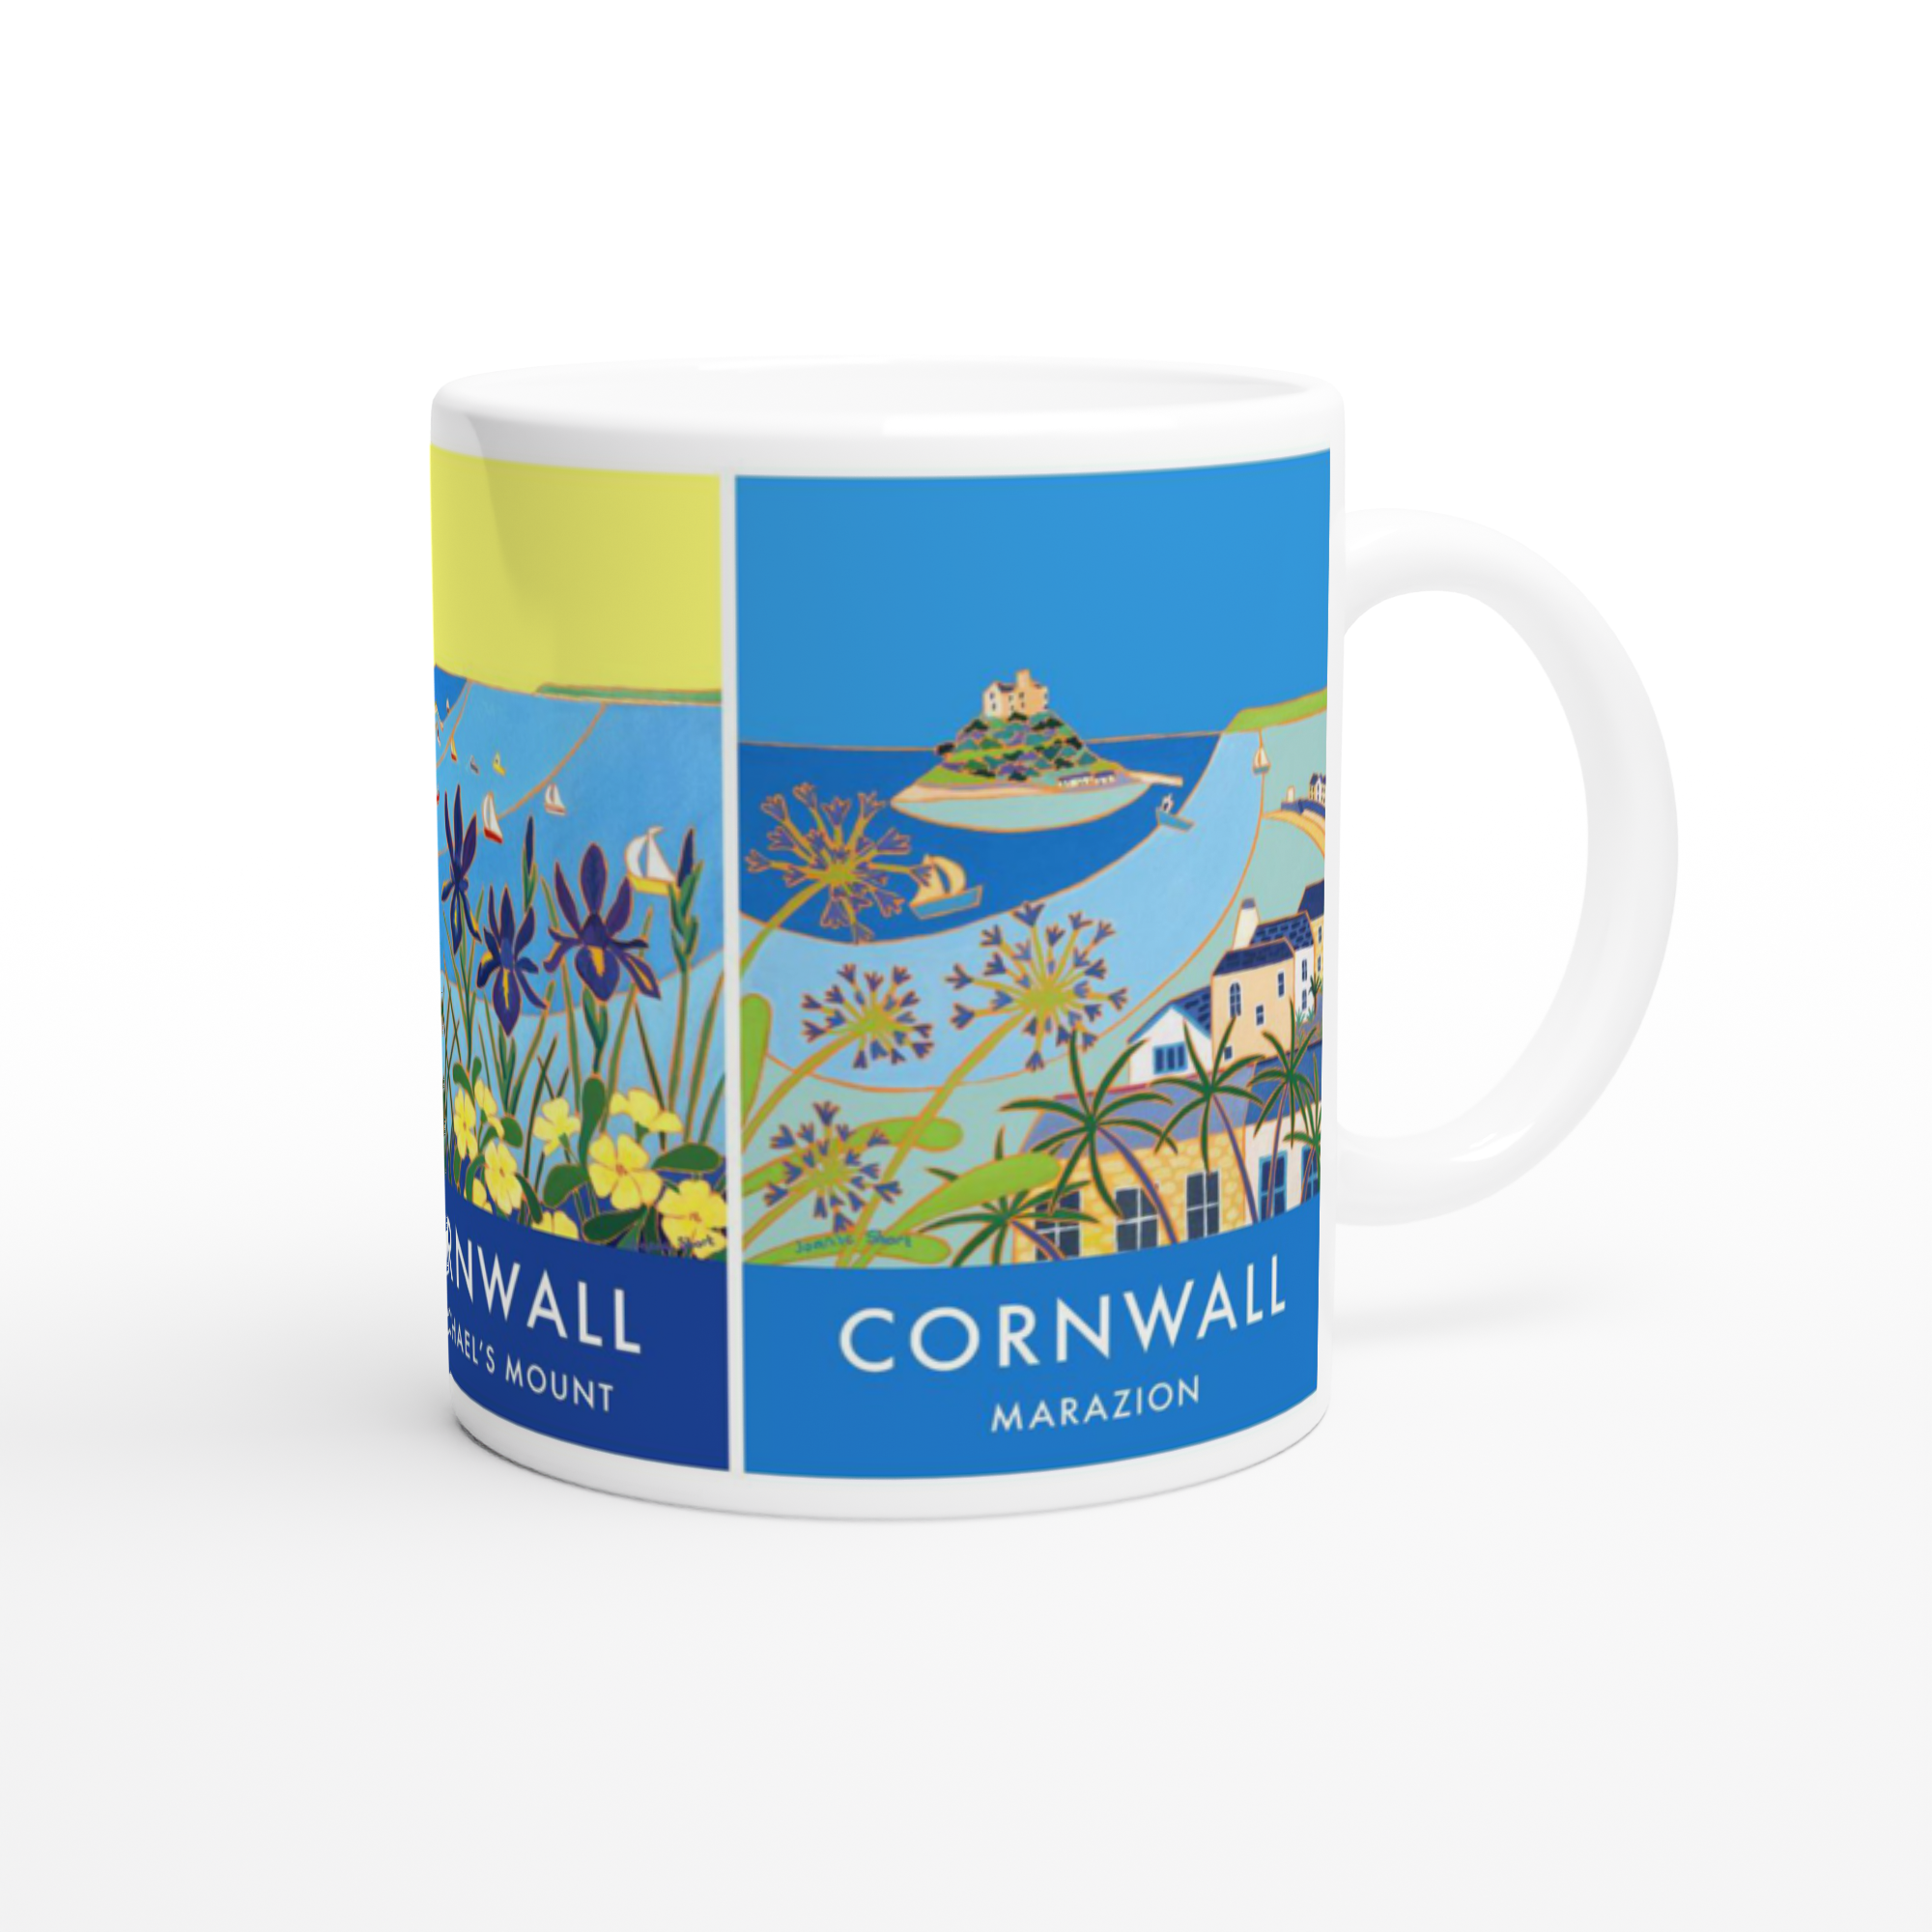 Art Mug featuring St Michael's Mount in Cornwall by Artist Joanne Short